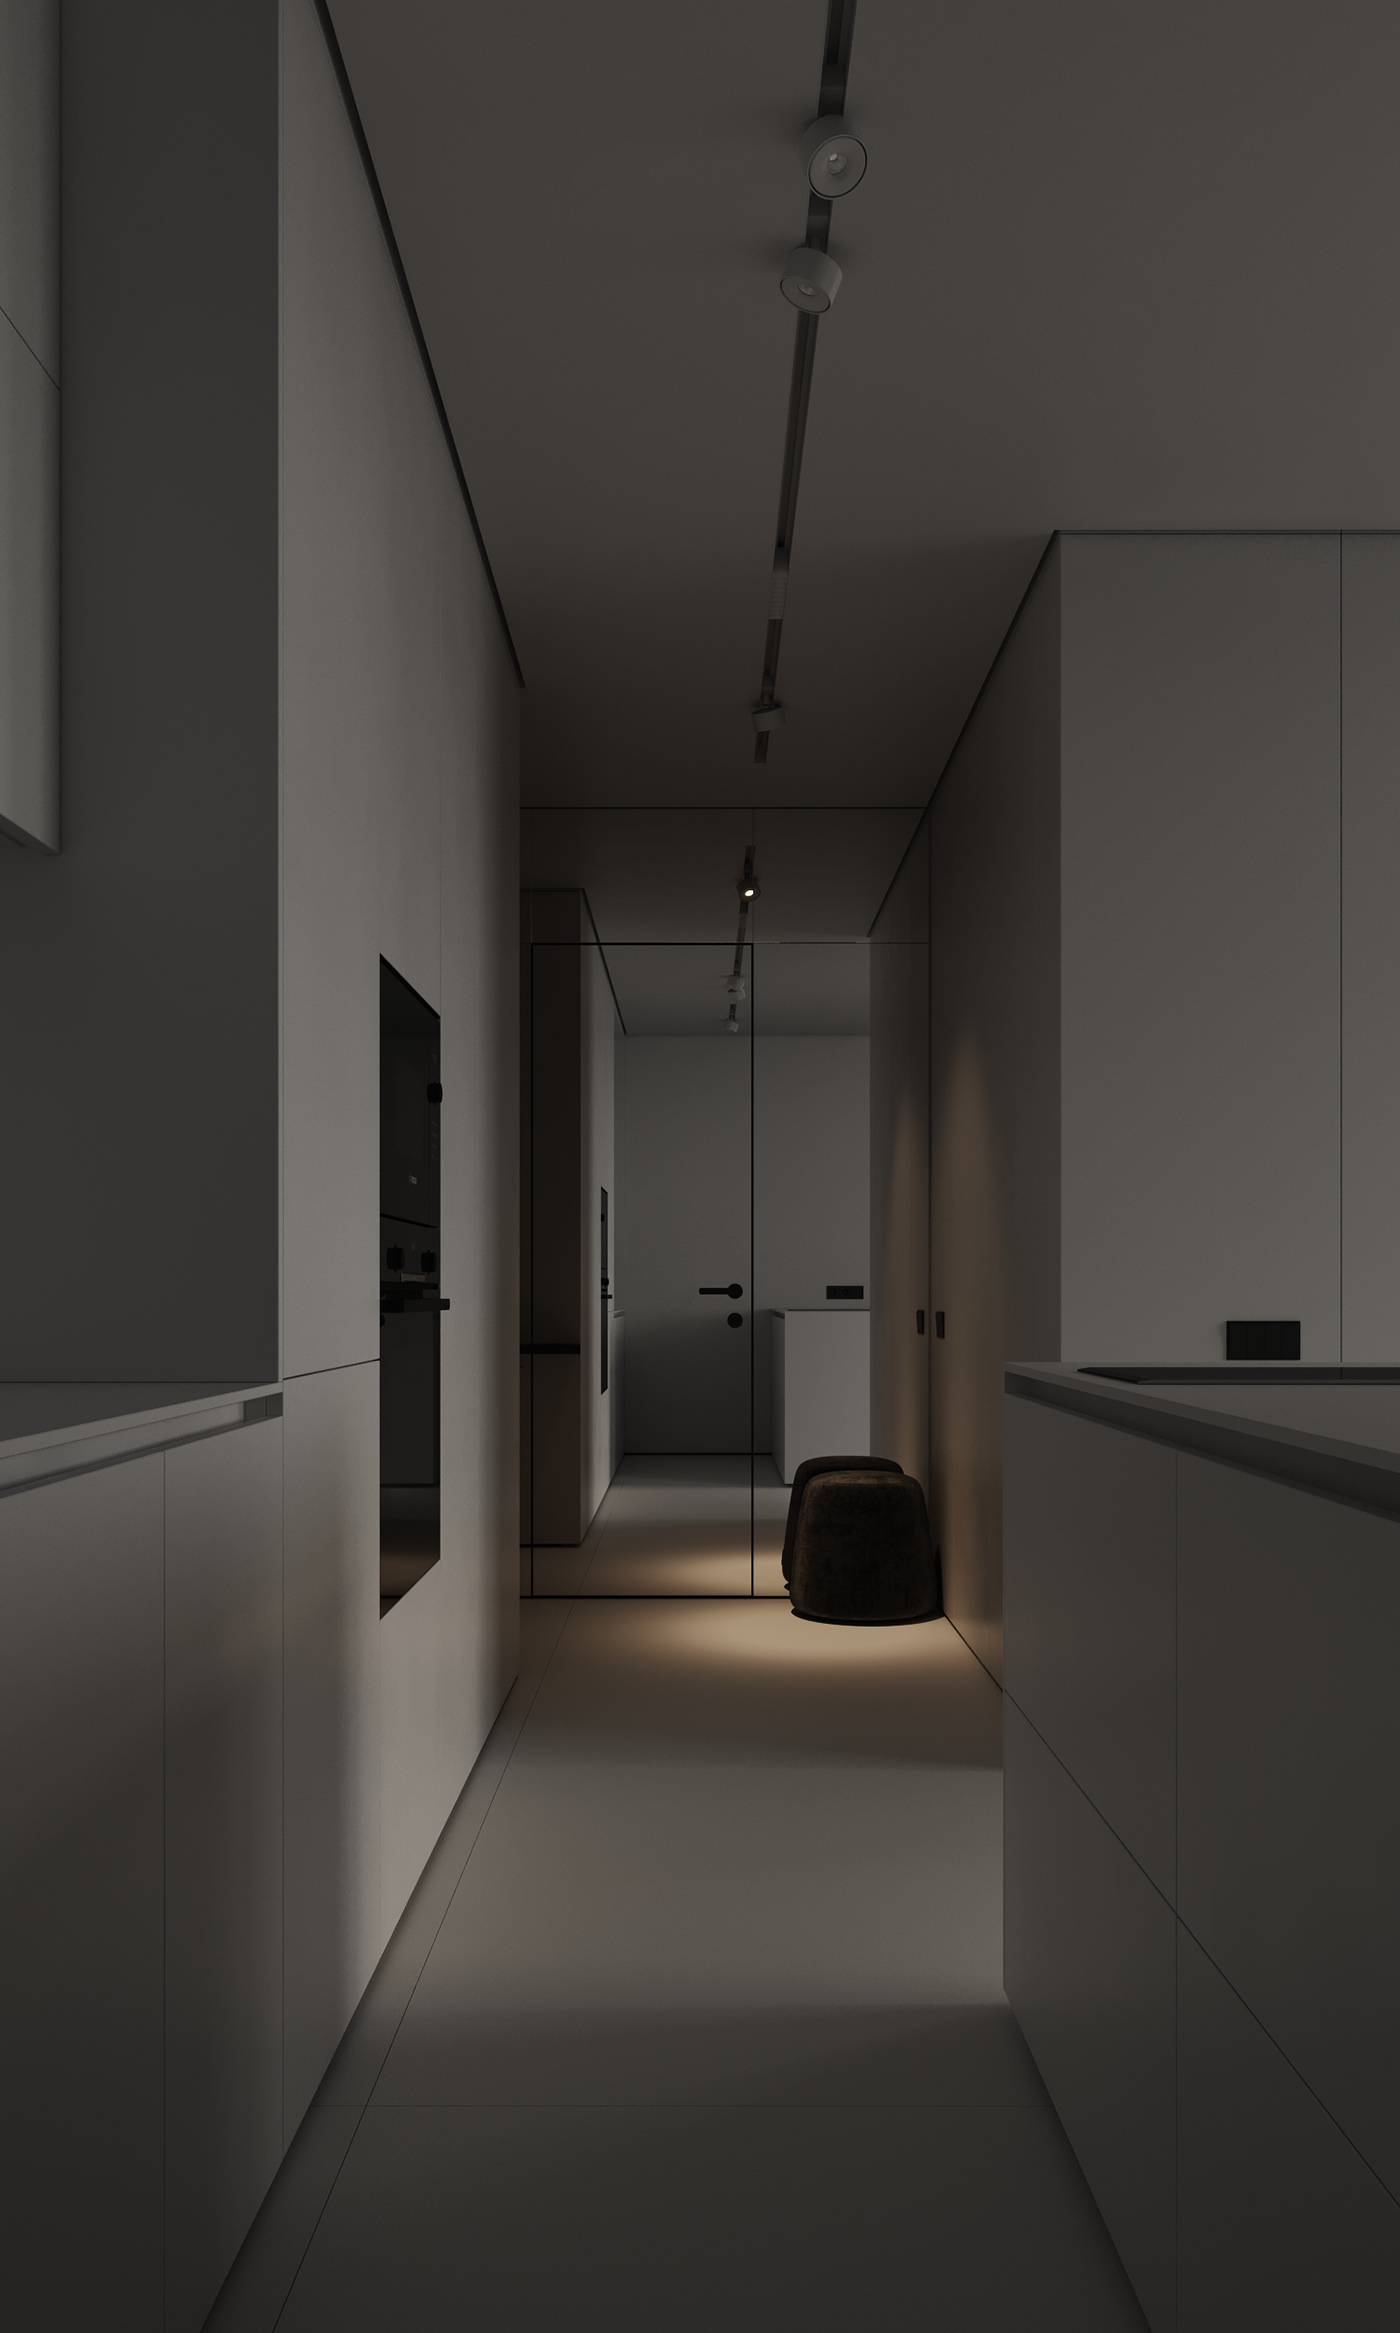 3ds max apartment arhitecture corona corona render  design Interior interior design  Render visualization